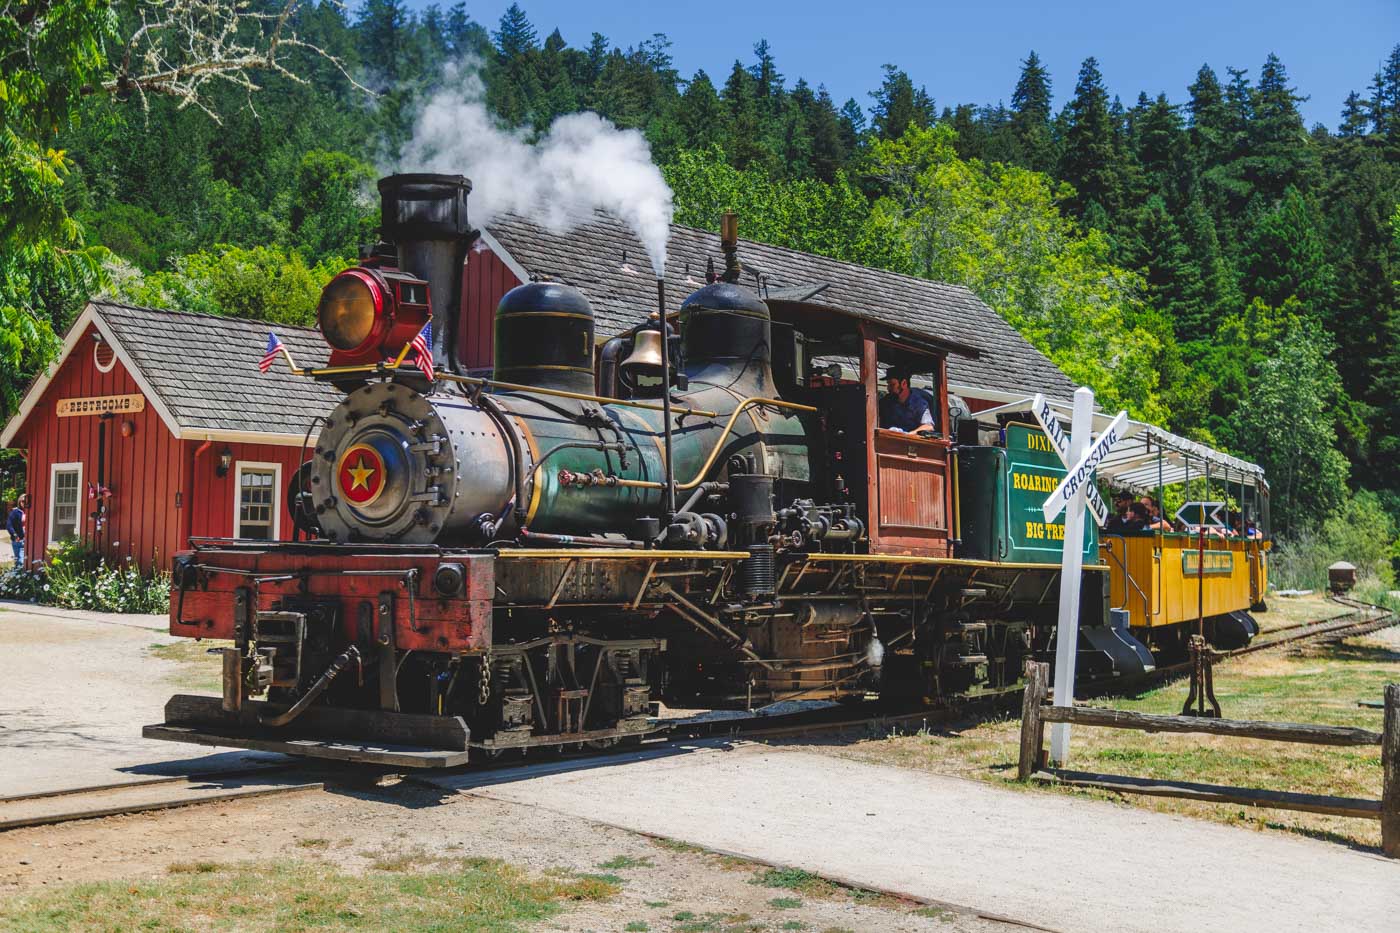 A steam train locomotive driving through the Roaring Camp Train Depot.